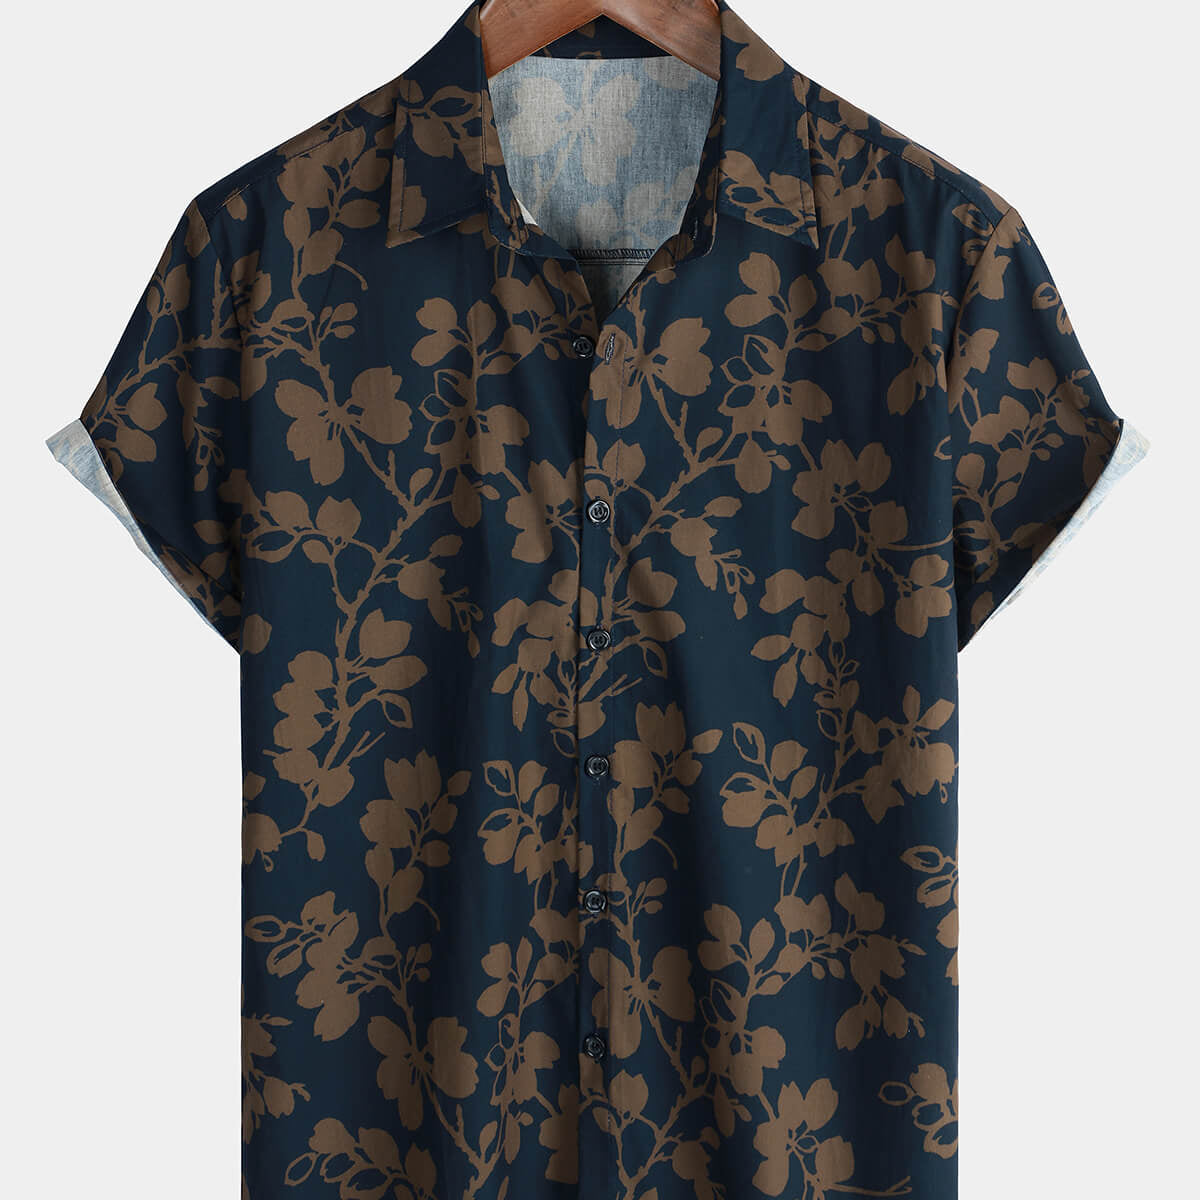 Men's Vintage Holiday Cotton Hawaiian Floral Button Up Navy Blue Short Sleeve Shirt